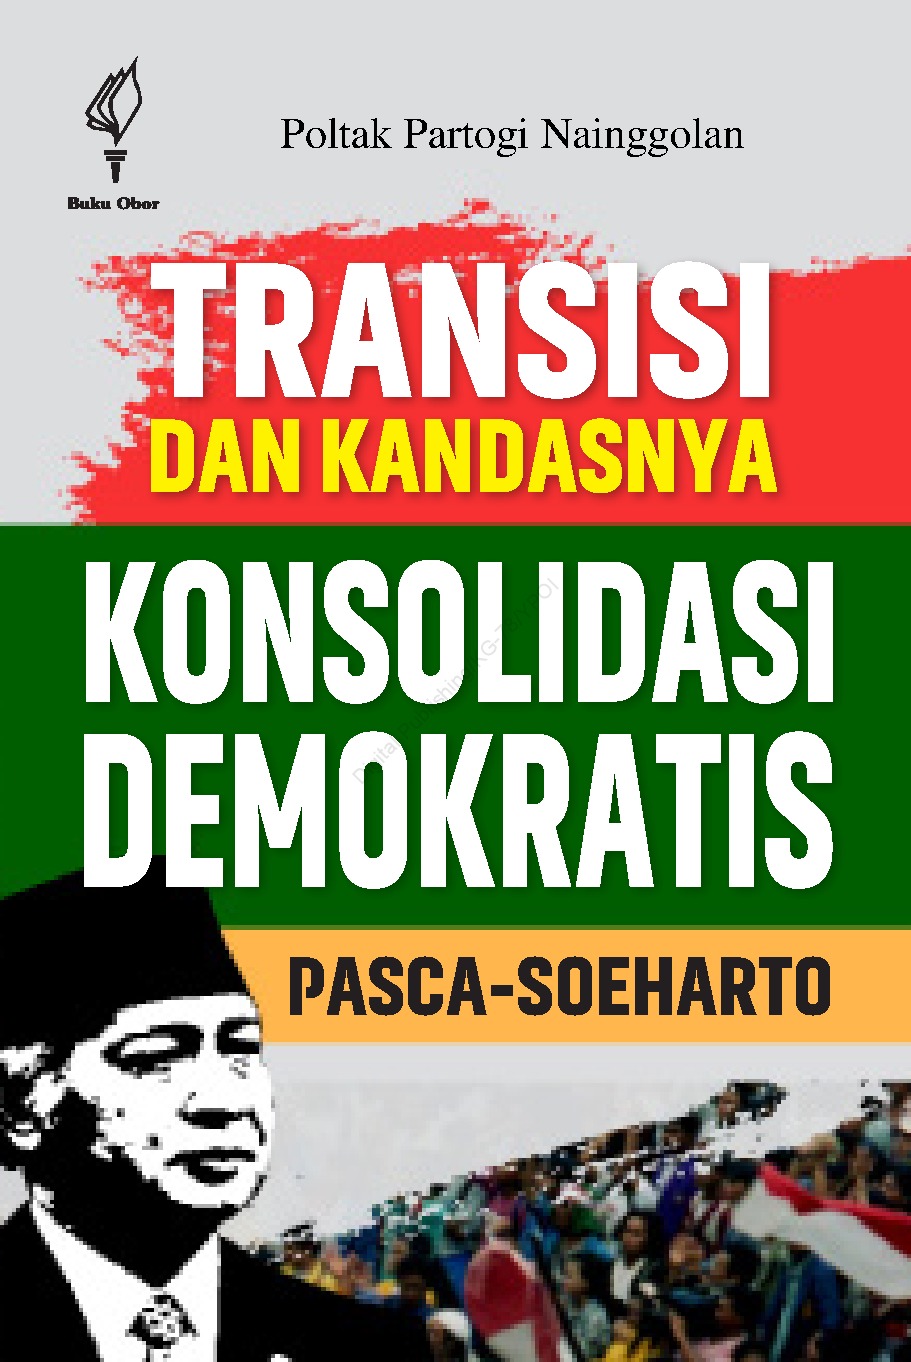 Transisi dan kandasnya konsolidasi demokratis pasca-Soeharto